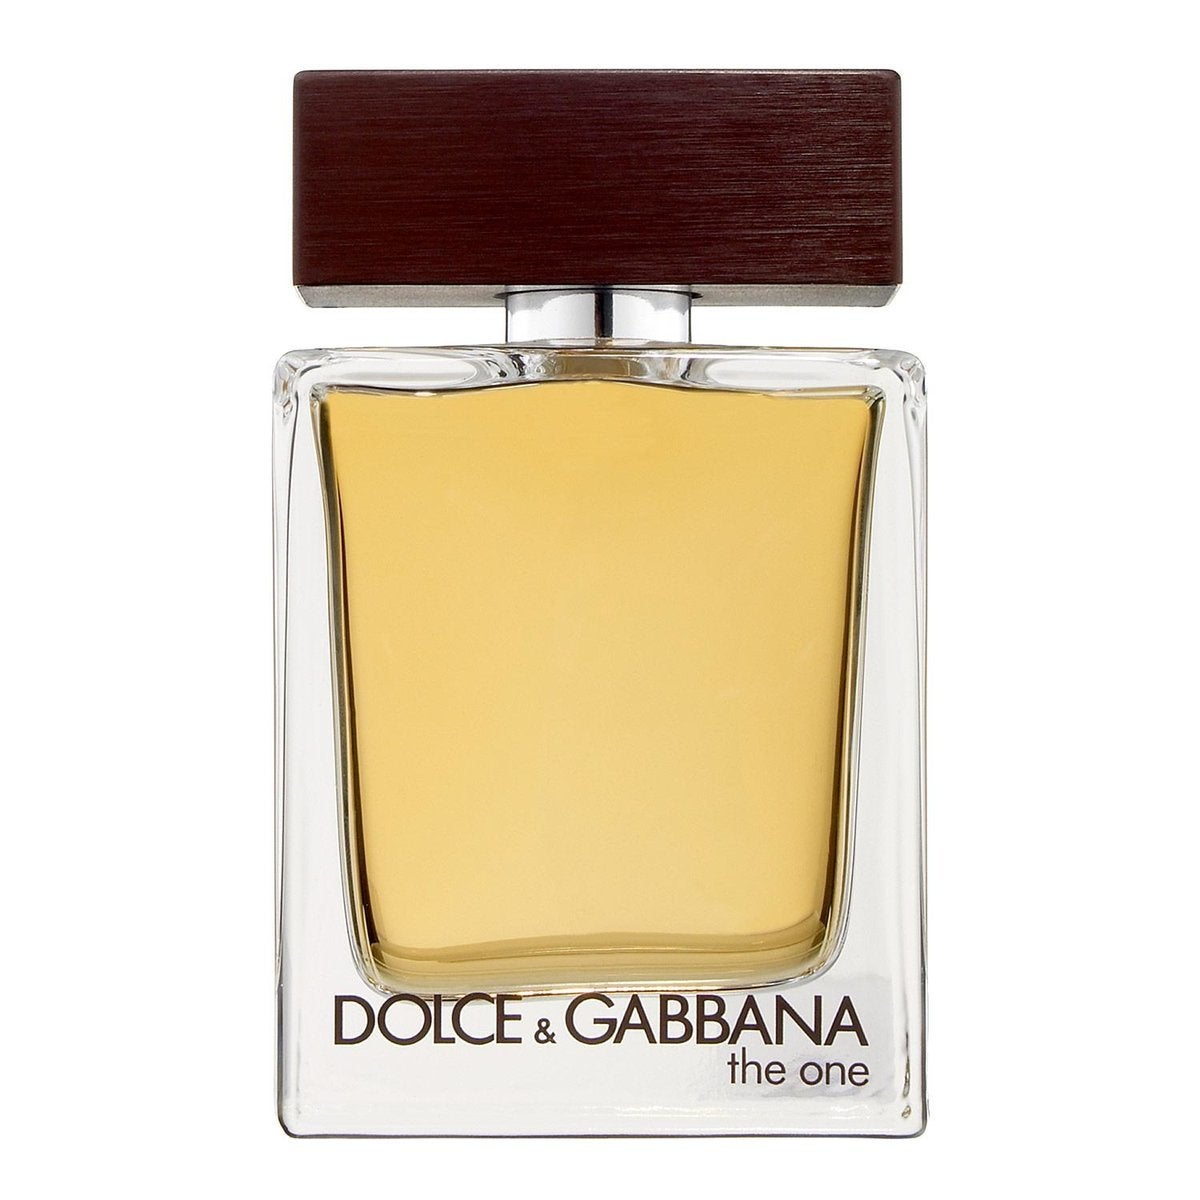 Dolce & Gabbana Dolce & Gabbana The One 100ml EDP Men's Cologne